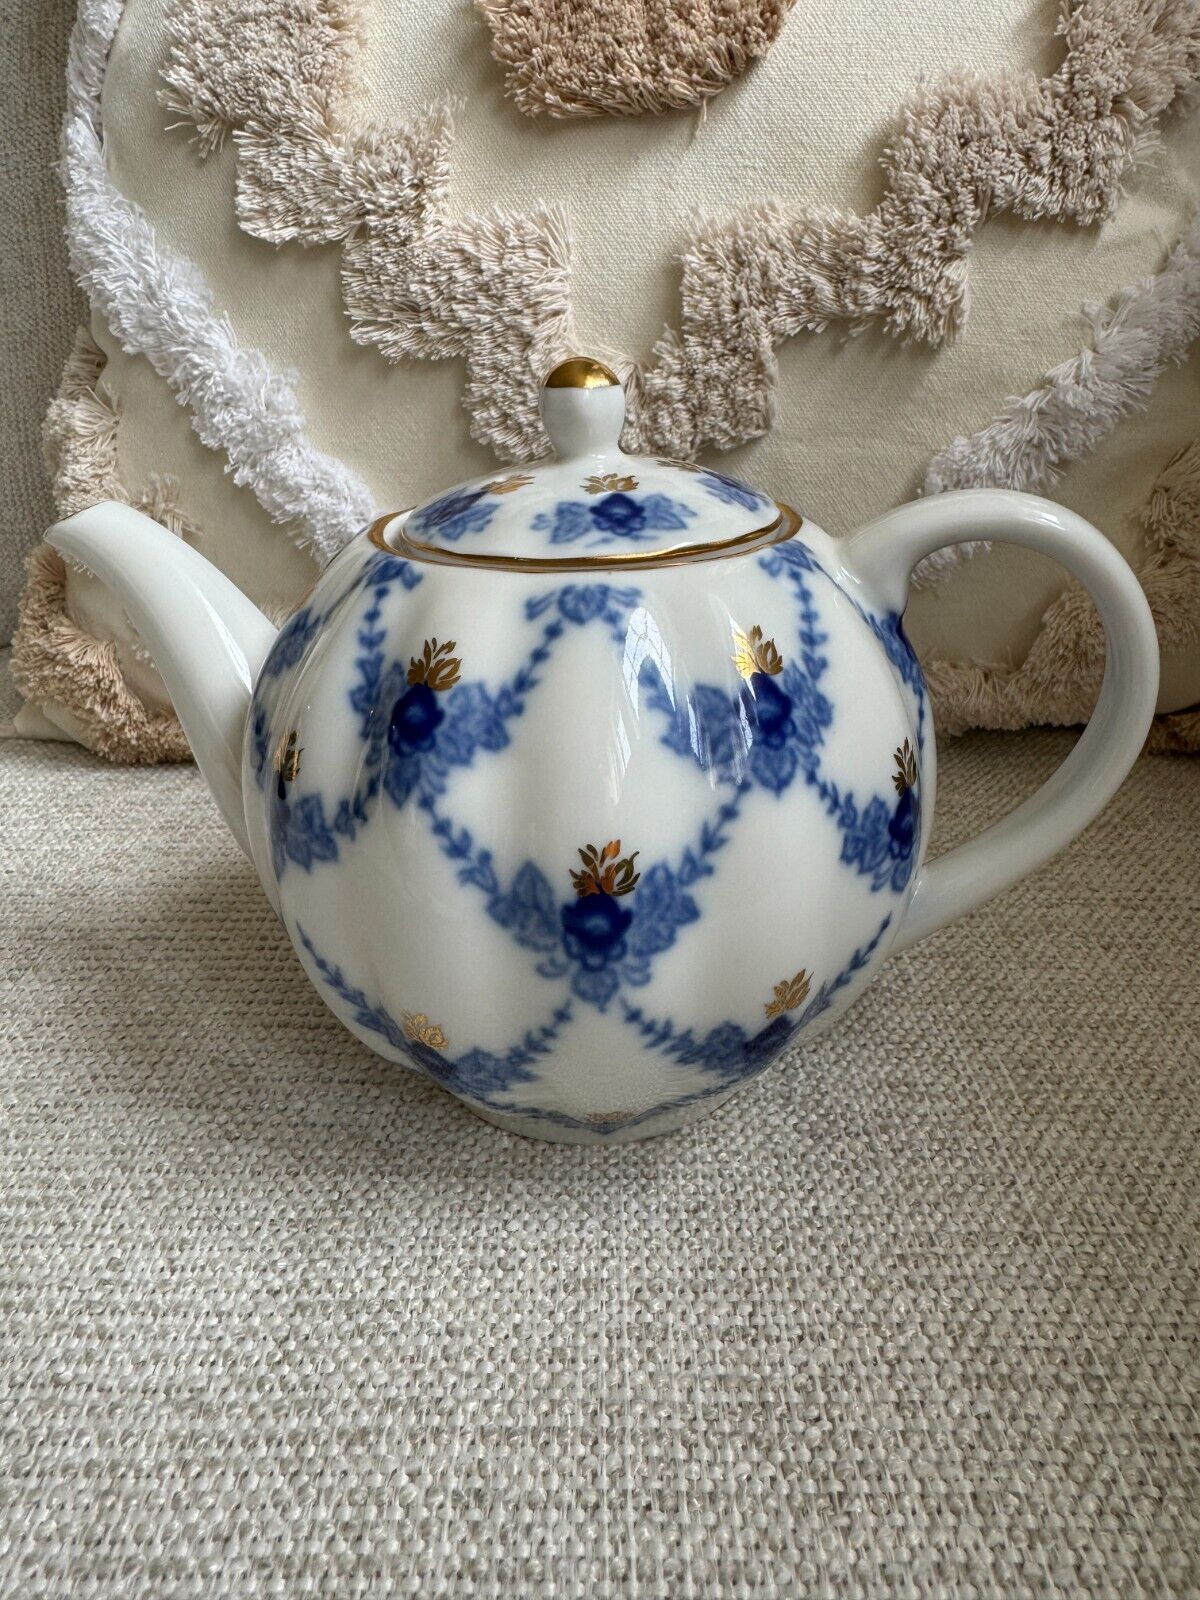 VTG LOMONOSOV 1744 RUSSIA BLUE & GOLD PORCELAIN TEA POT For Display Only